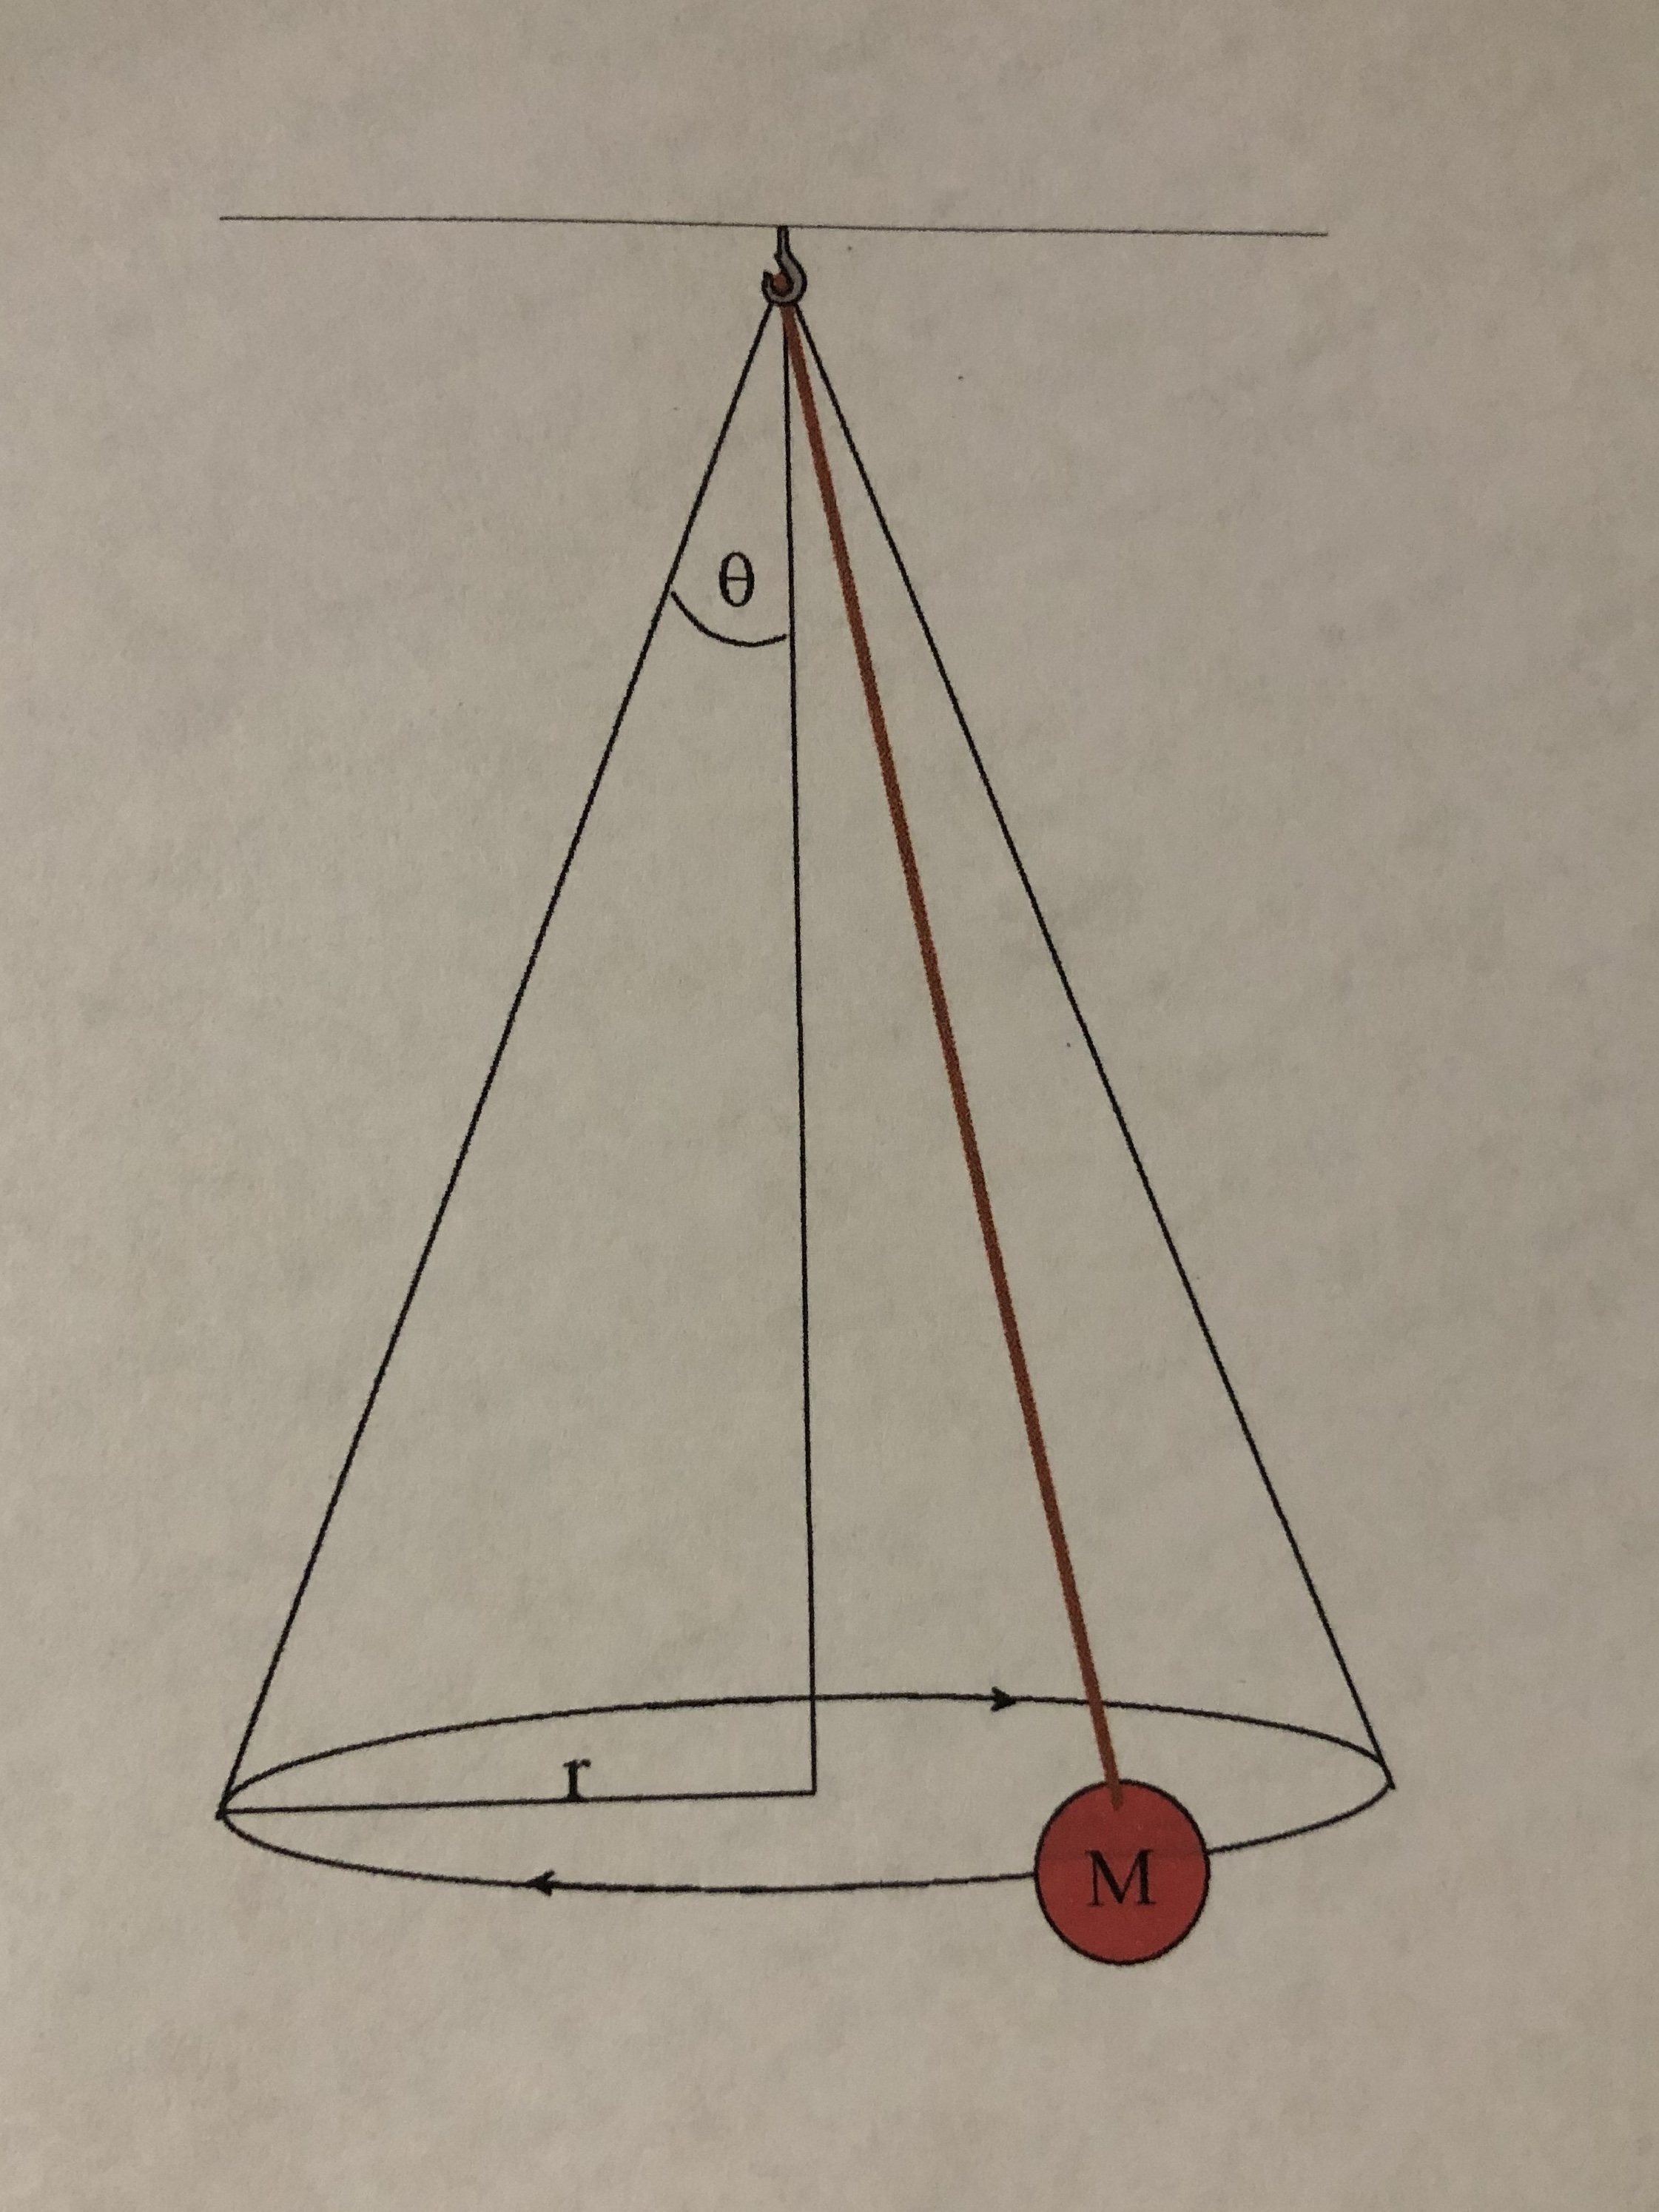 diffraction definition pendulum angle